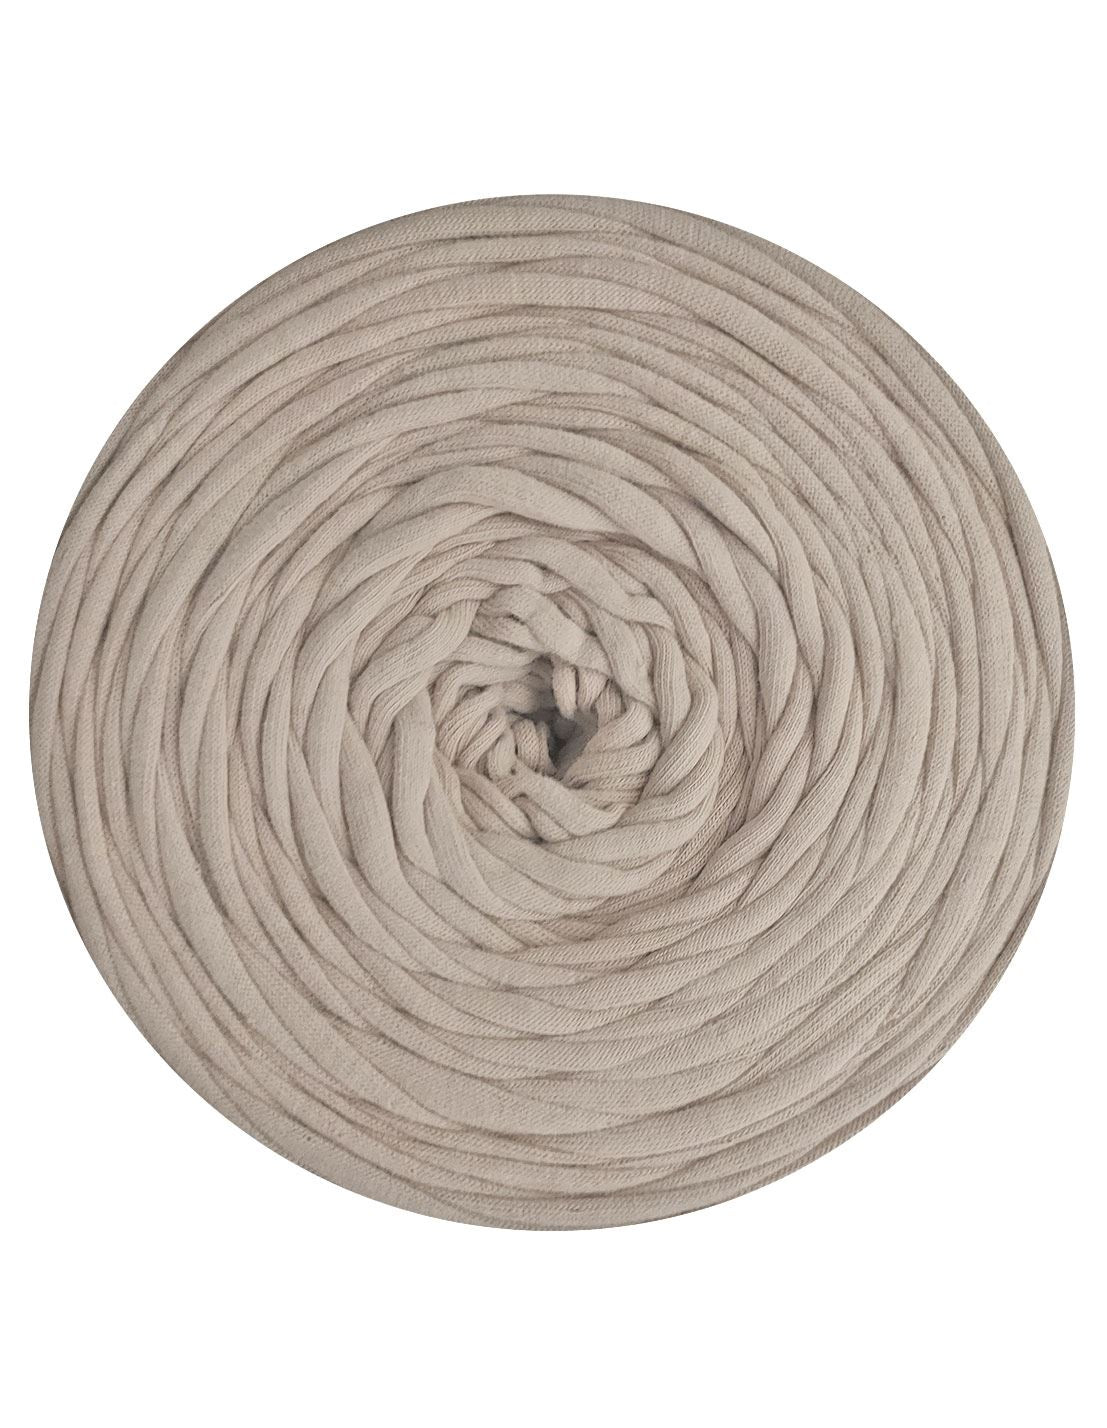 Light smoke grey  t-shirt yarn (100-120m)